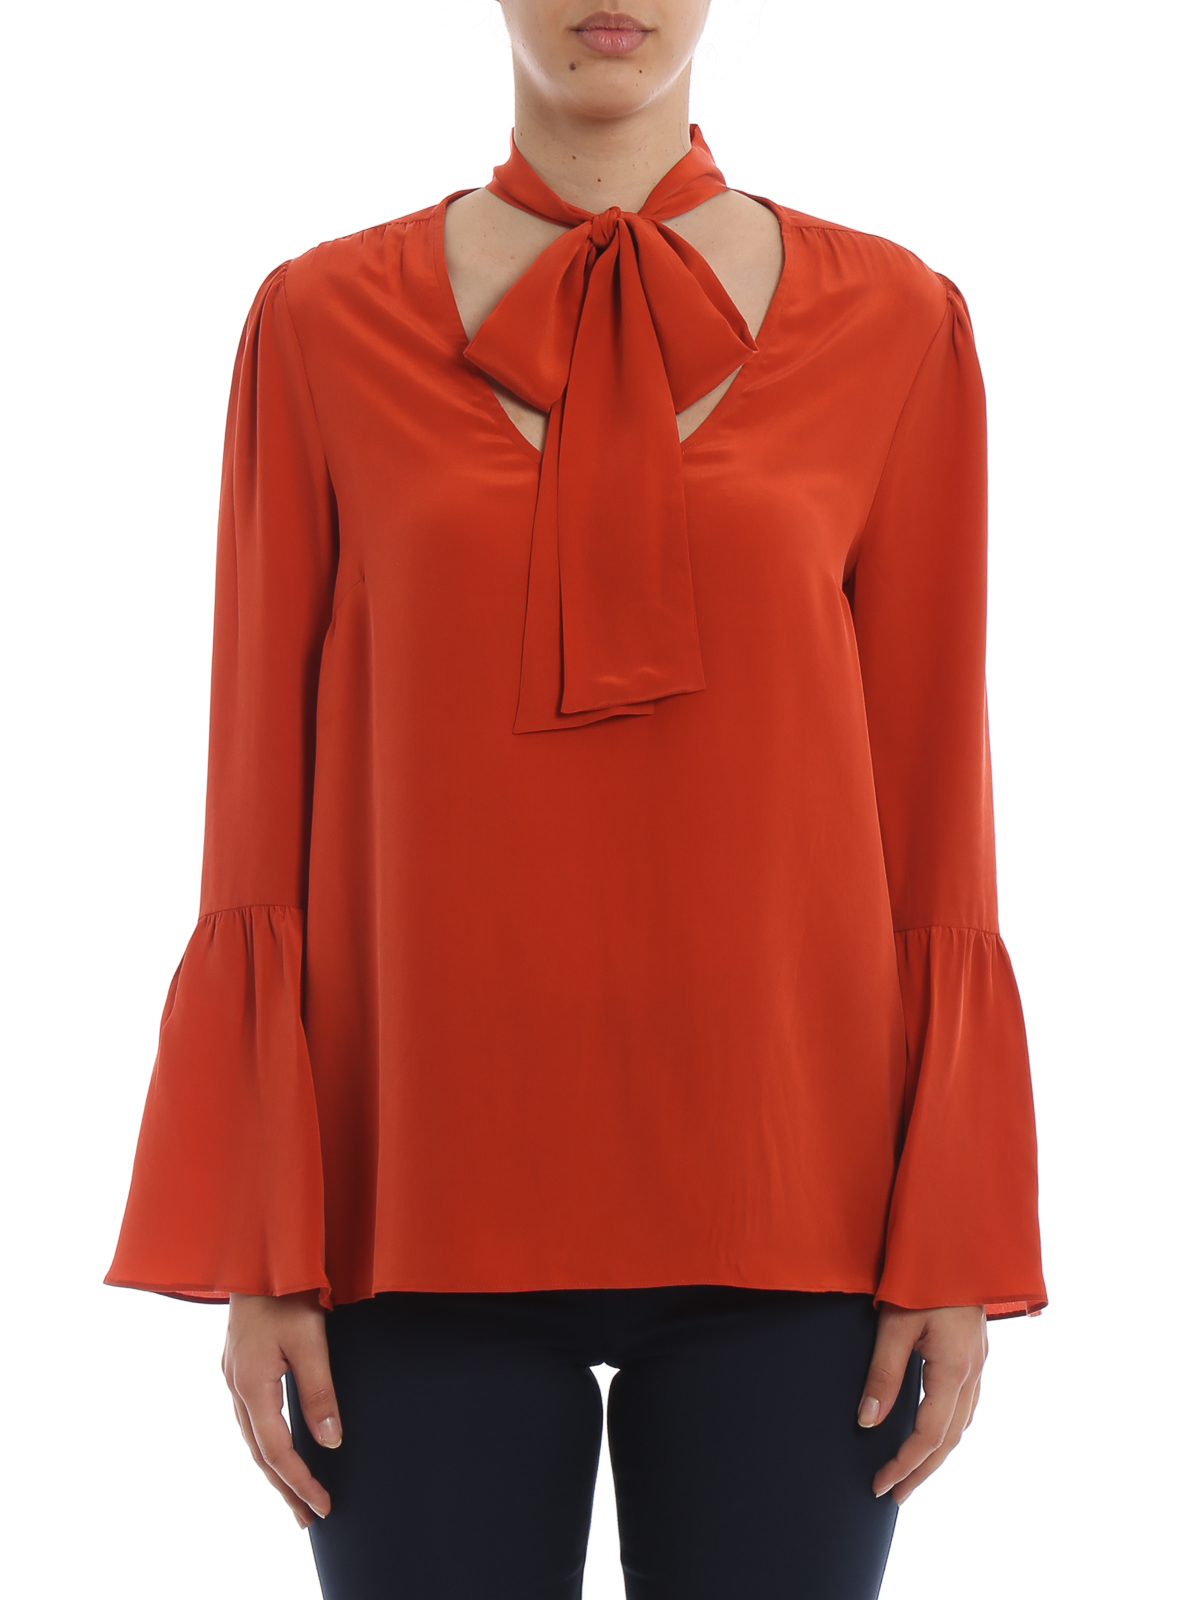 michael kors orange blouse